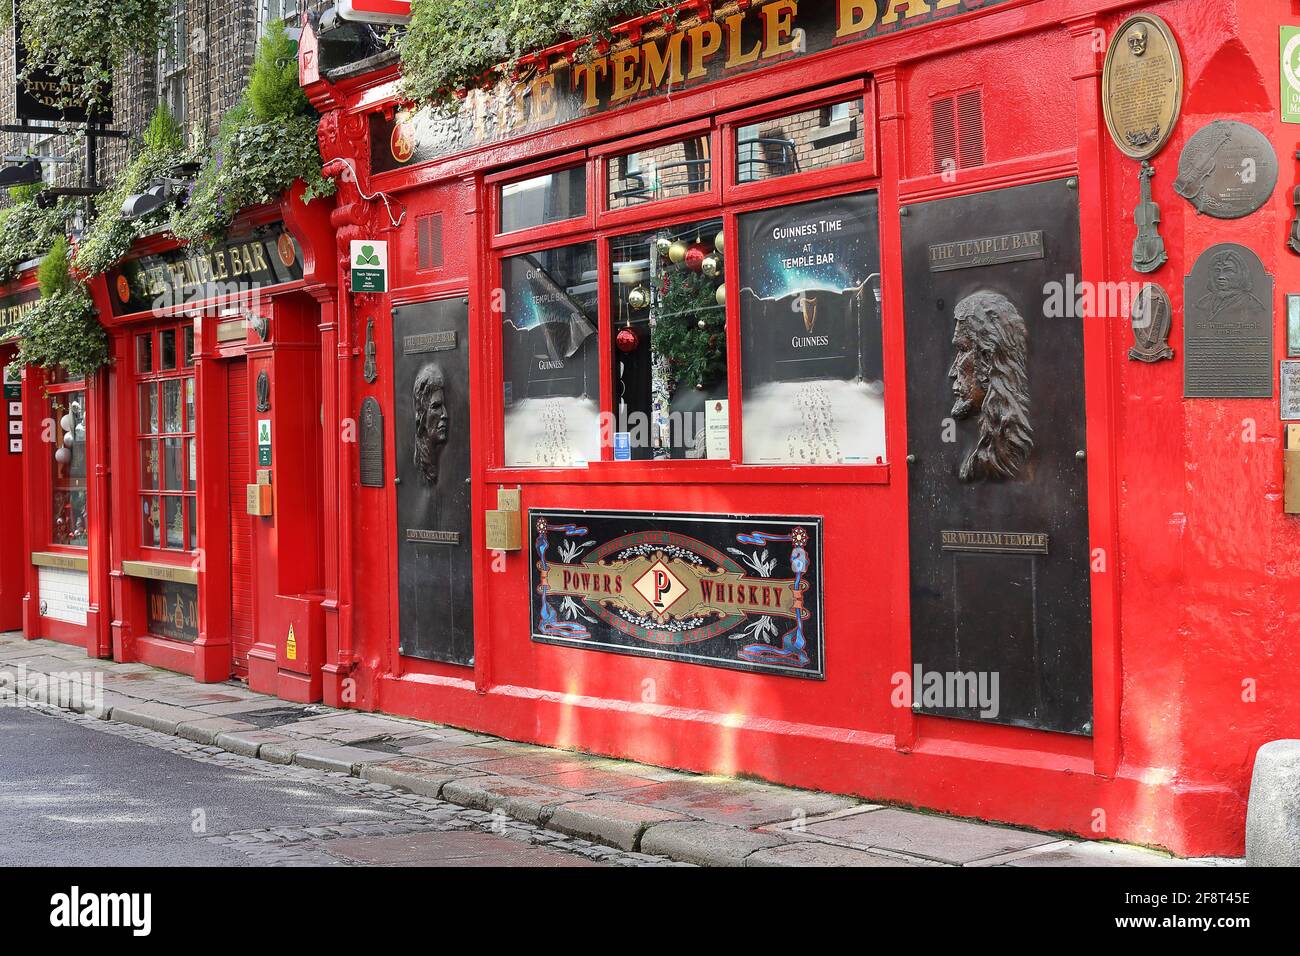 Temple bar pub a Dublino Irlanda Foto Stock